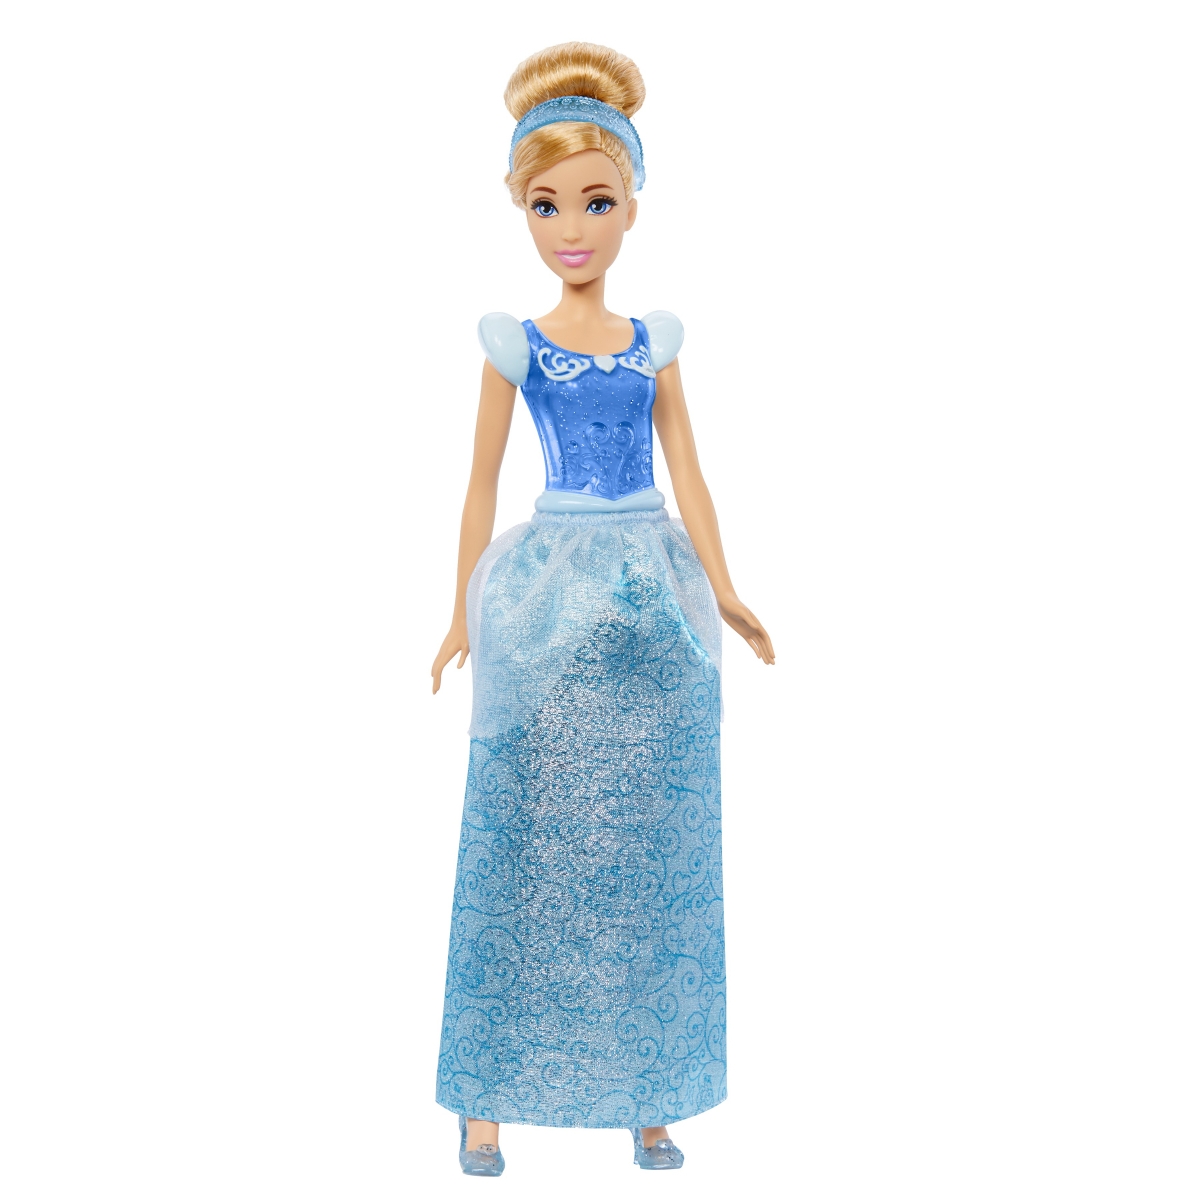 Disney Princess Fashion Core Doll Asst. Cinderella Lelle HLW06